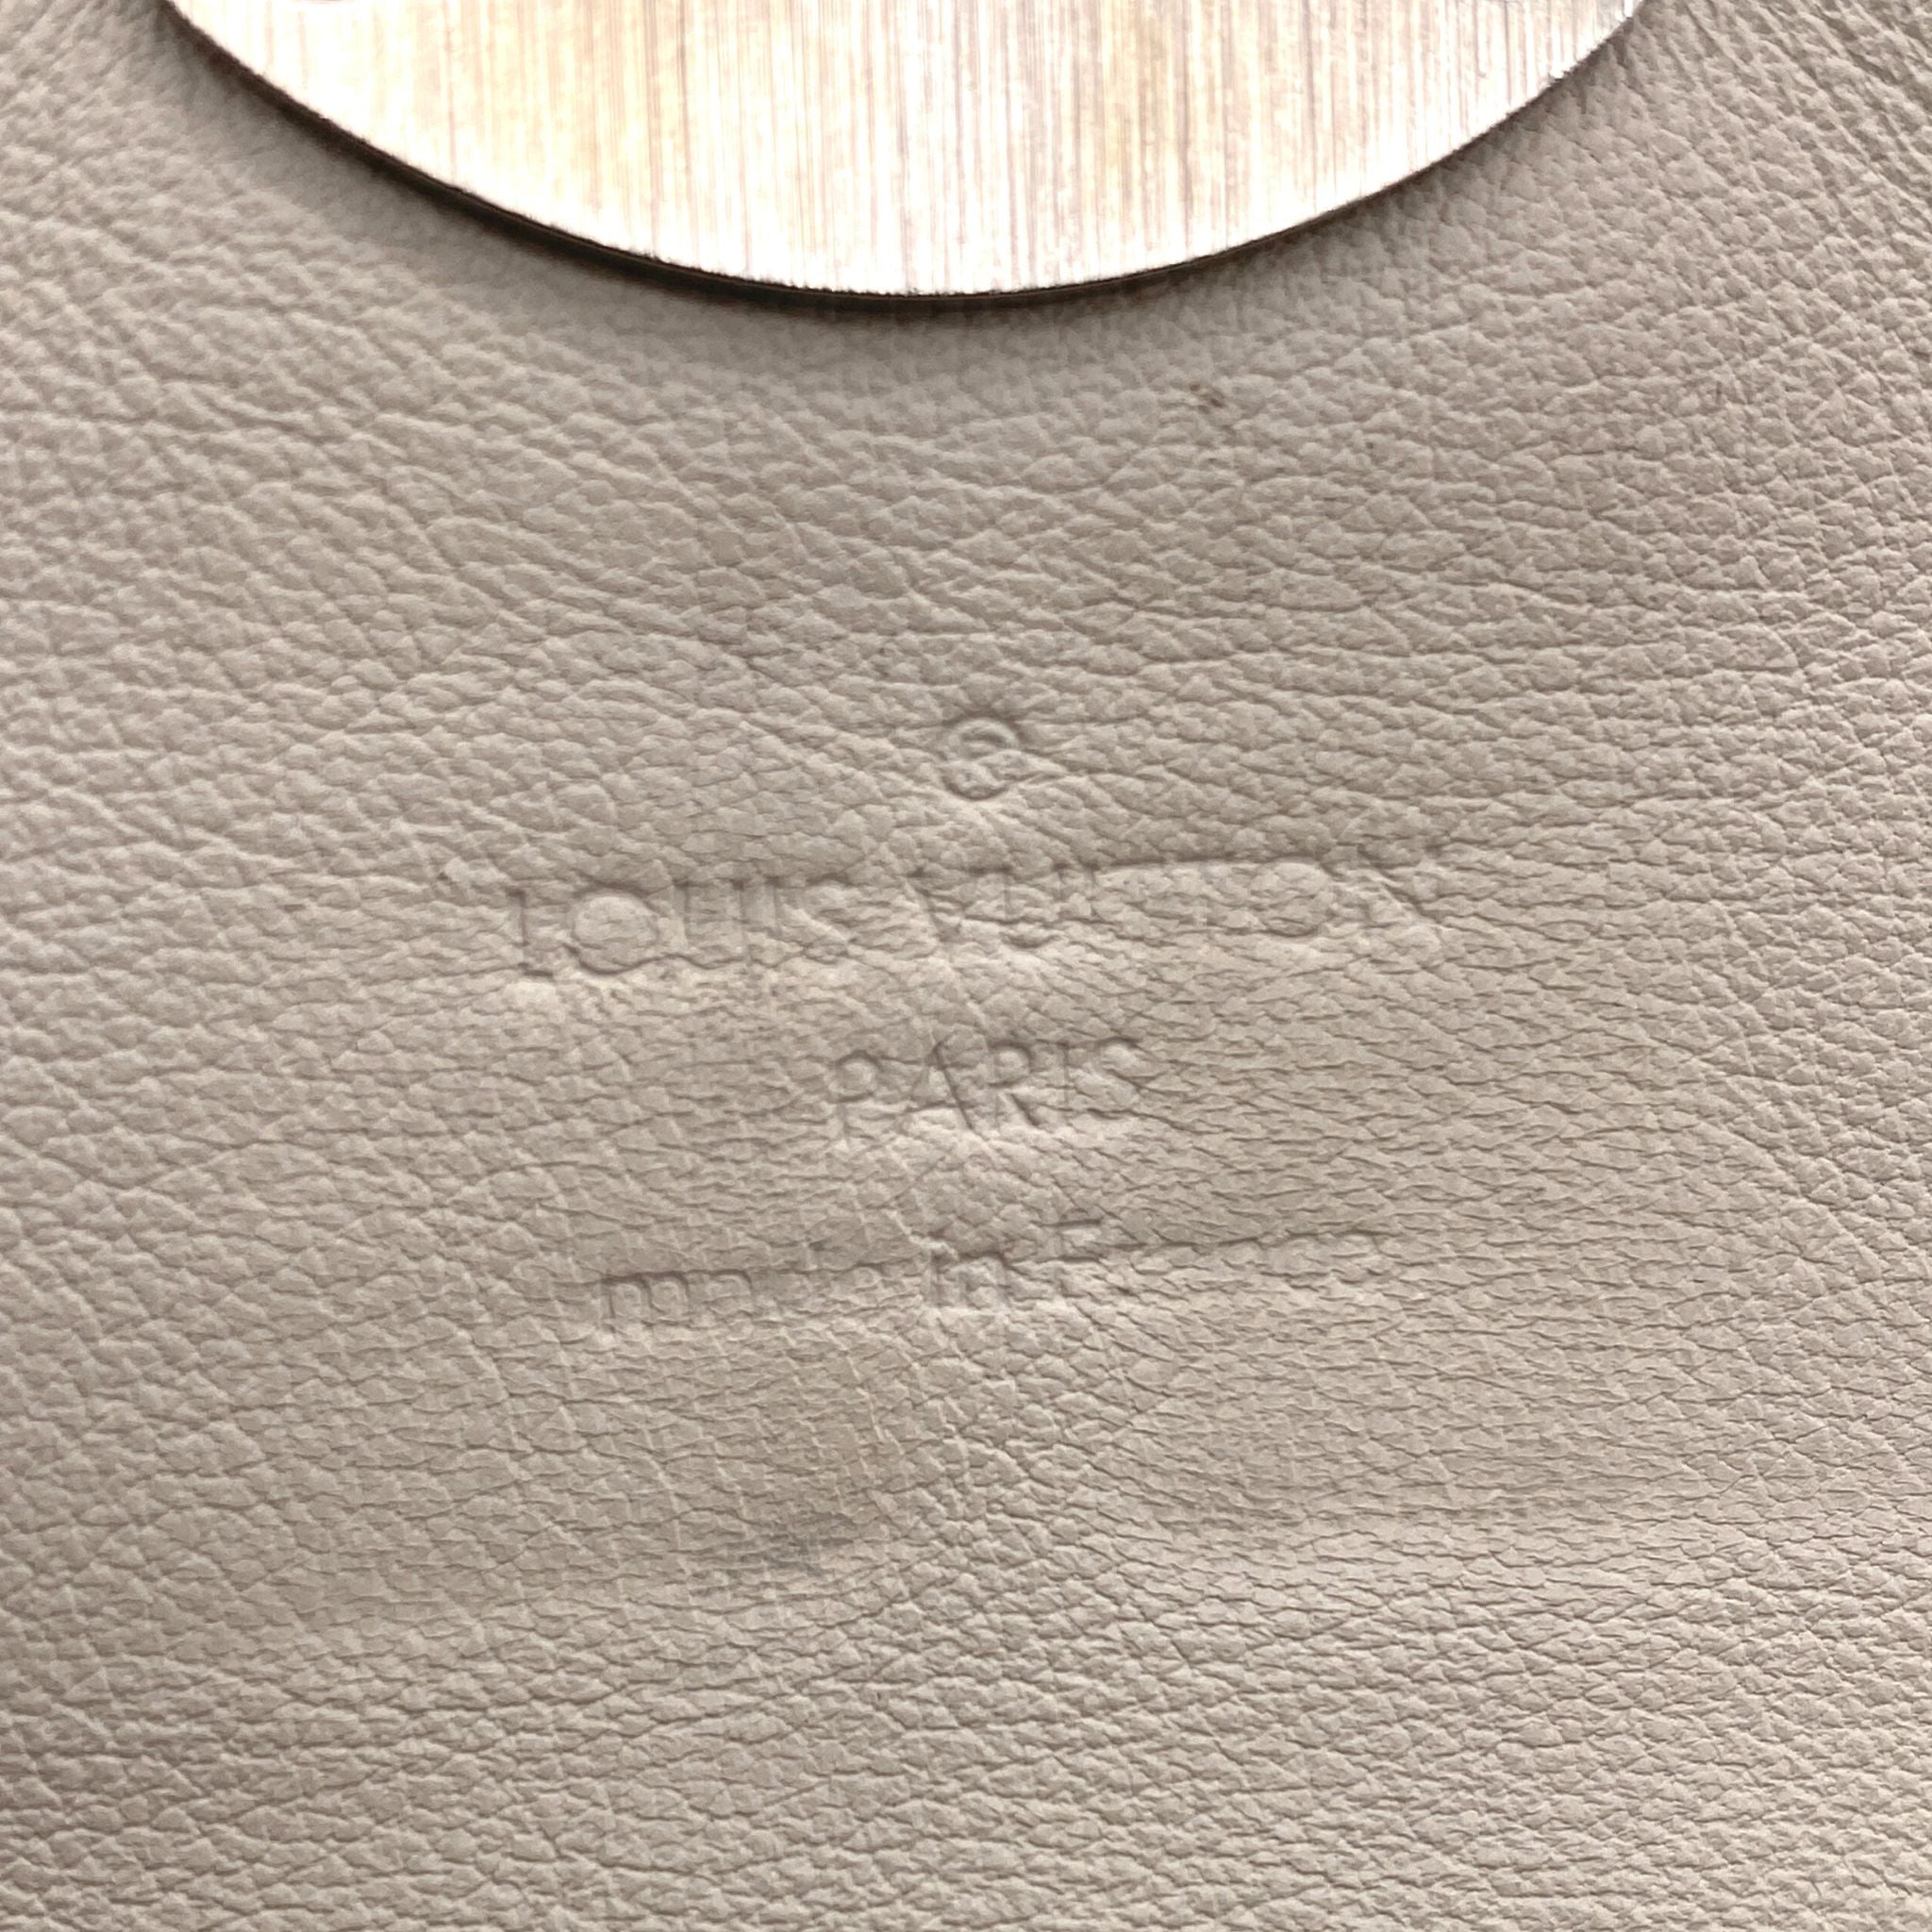 Louis Vuitton Black Mahina Leather Iris XS Wallet at 1stDibs